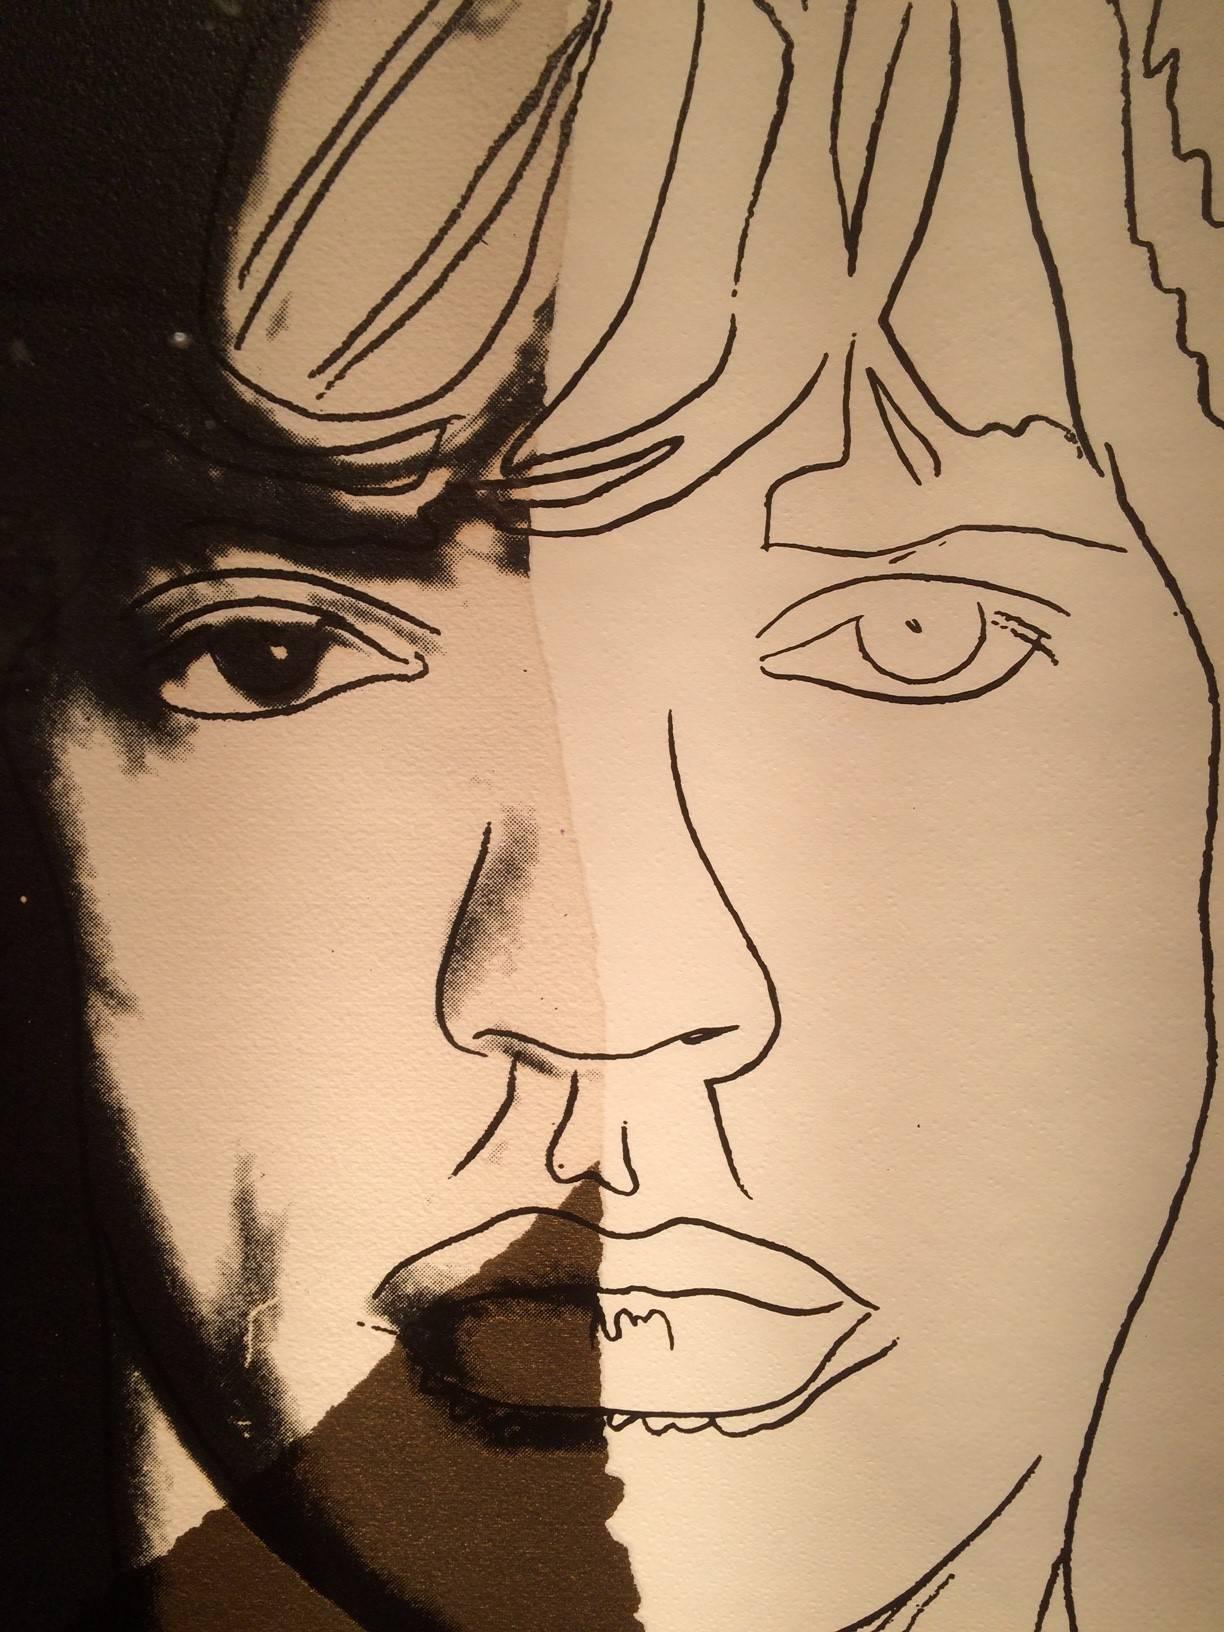 Mick Jagger II.146 - Print by Andy Warhol